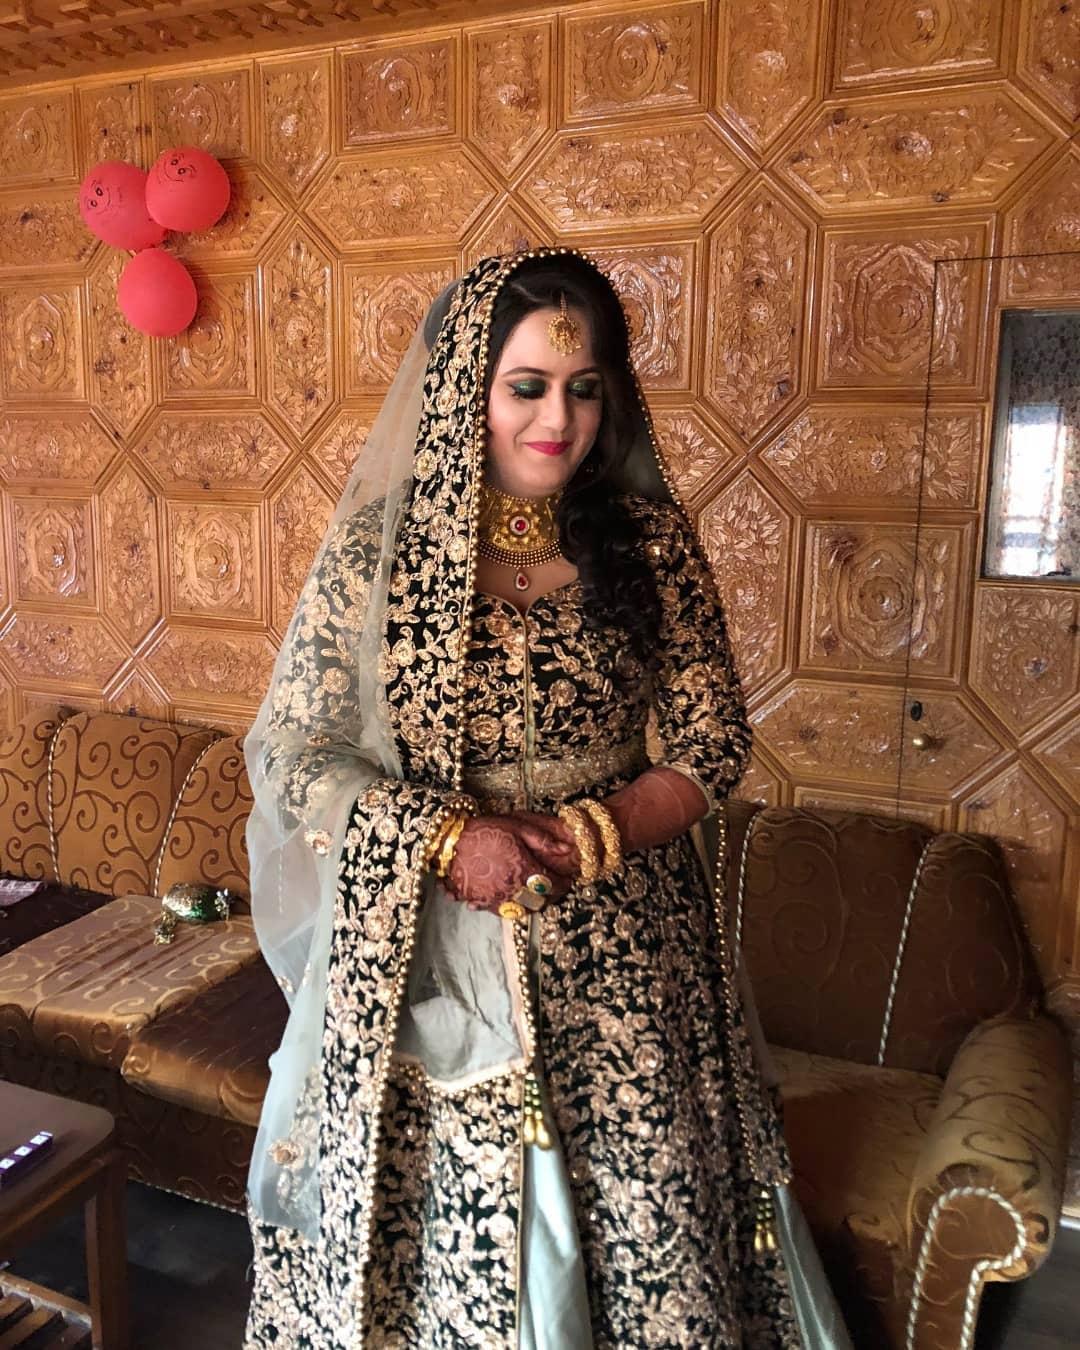 Bridal most afforadable price range within 1 lac – Ayesha And Usman